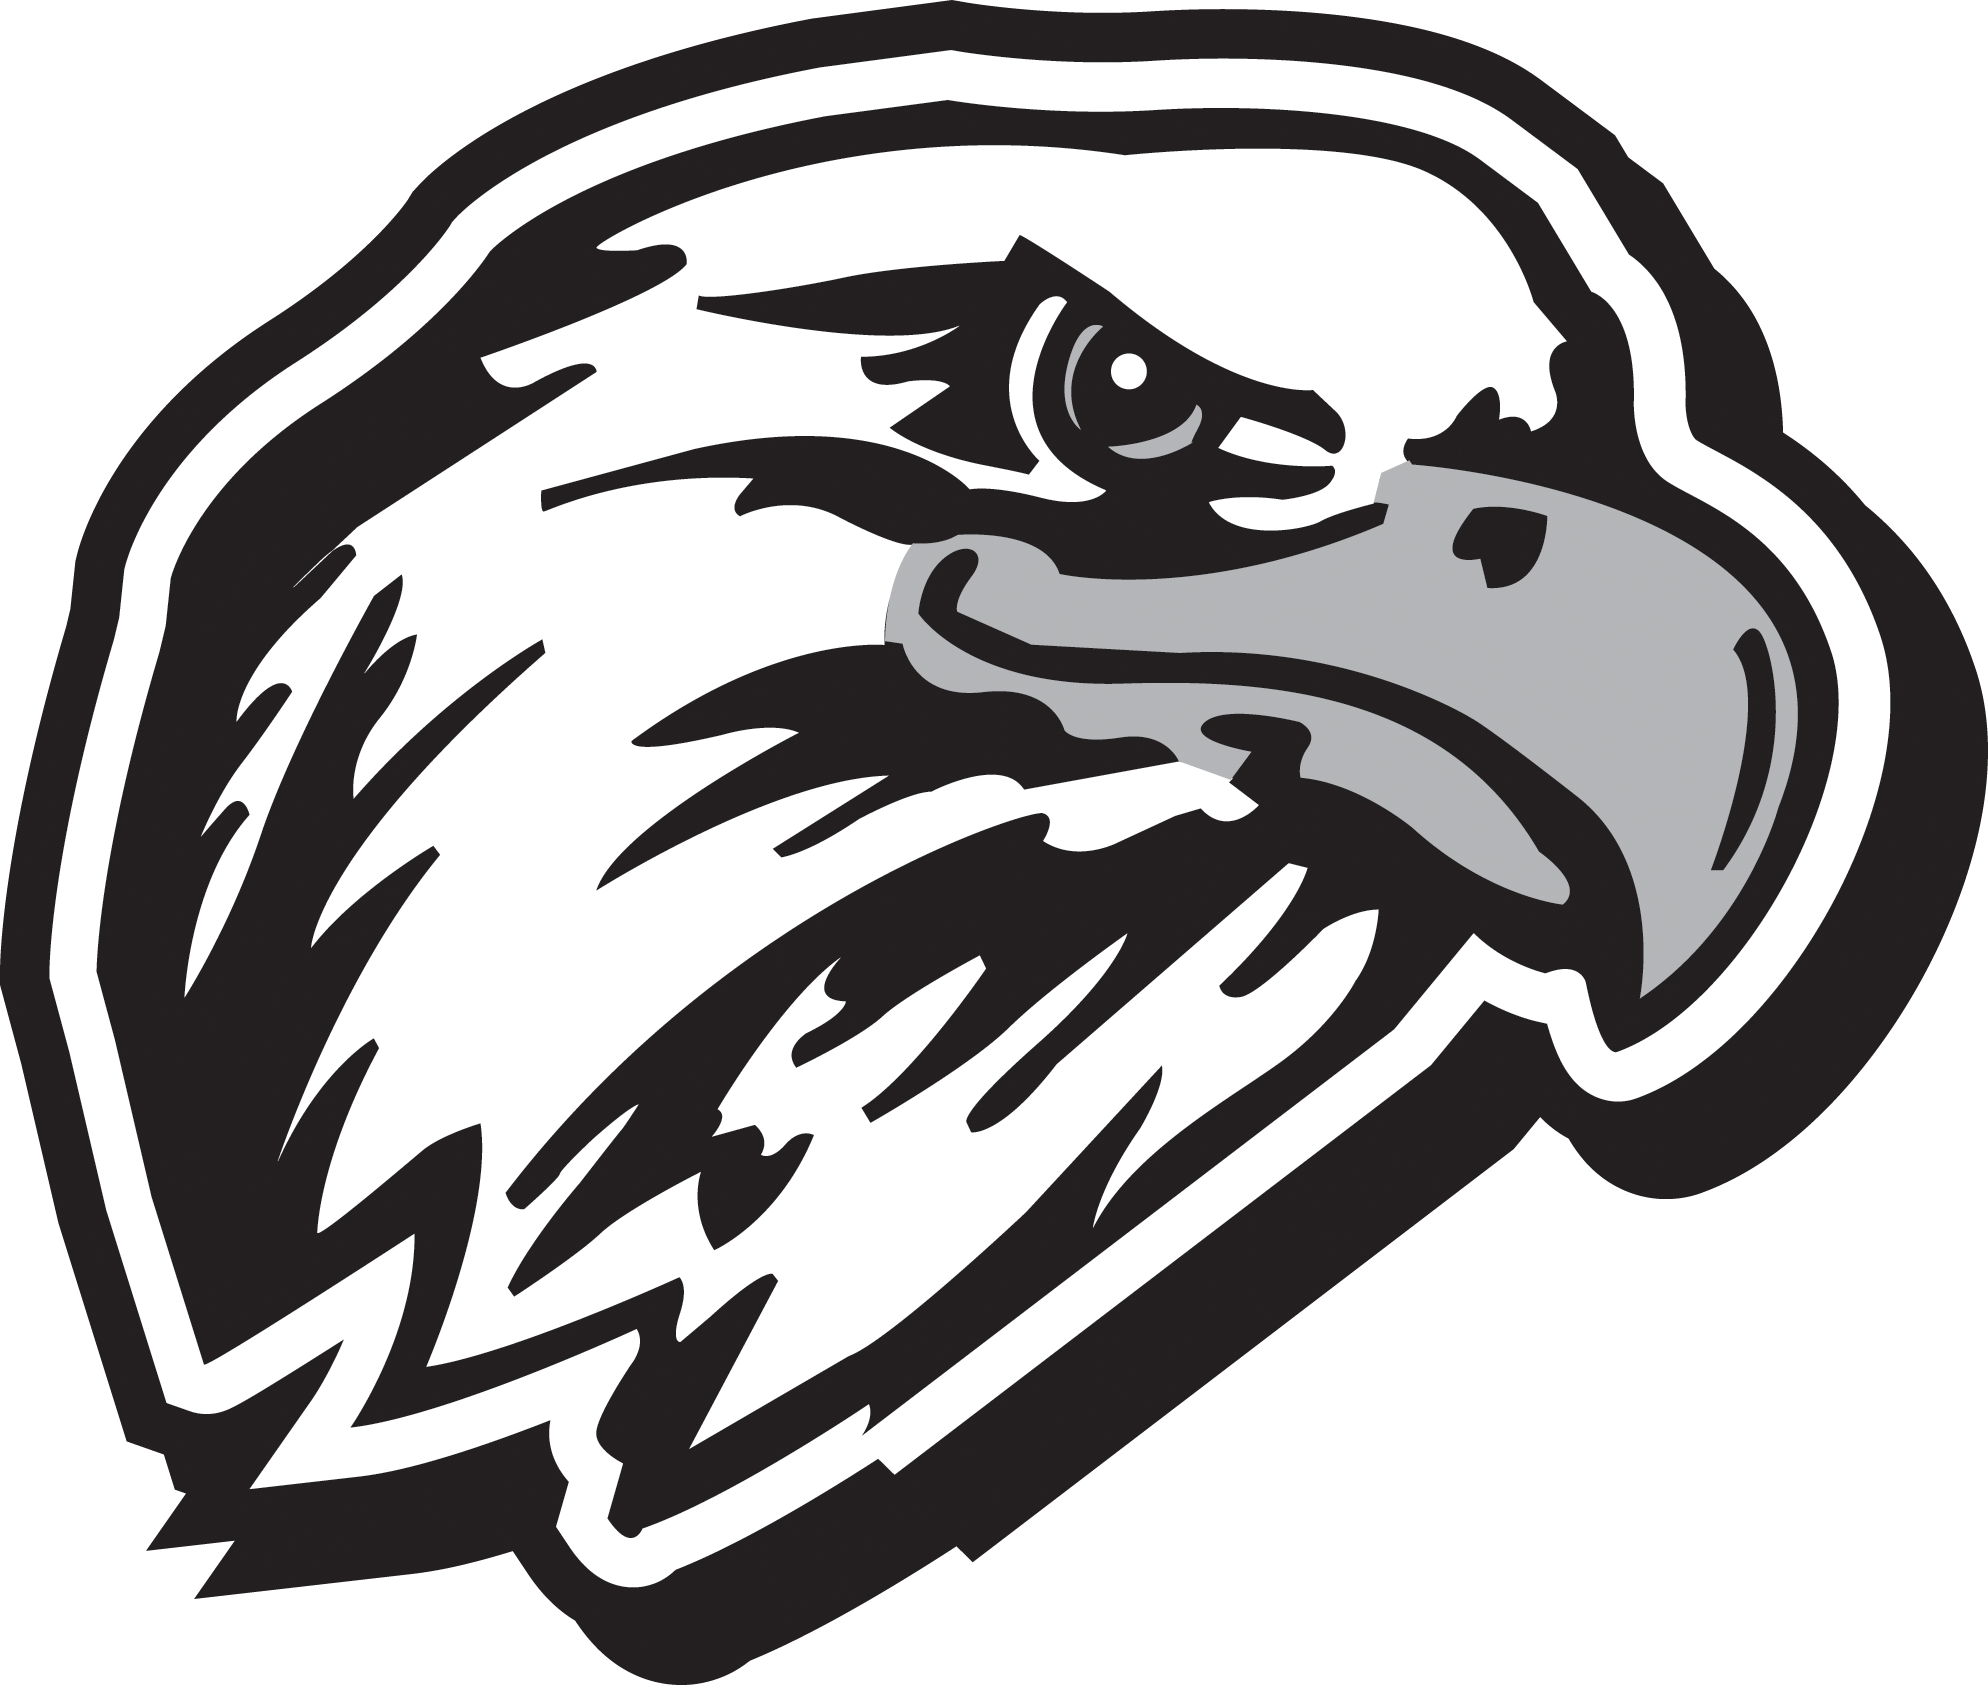 Black and White Eagle Football Logo - Eagle football mascot picture download